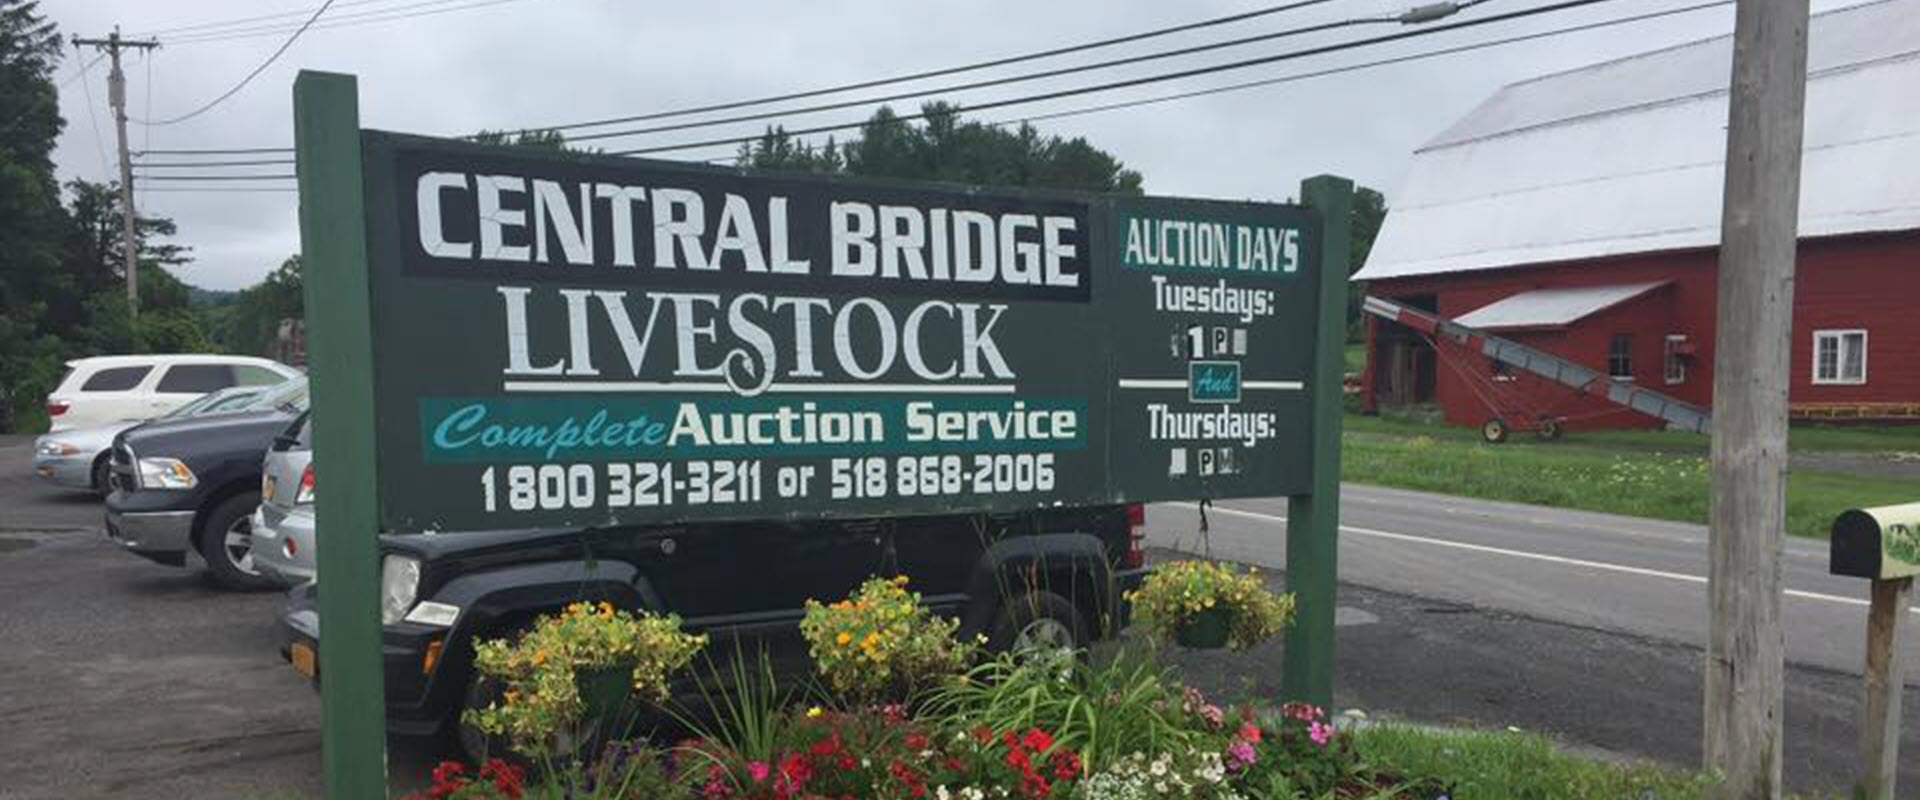 Central Bridge Livestock Auction location sign